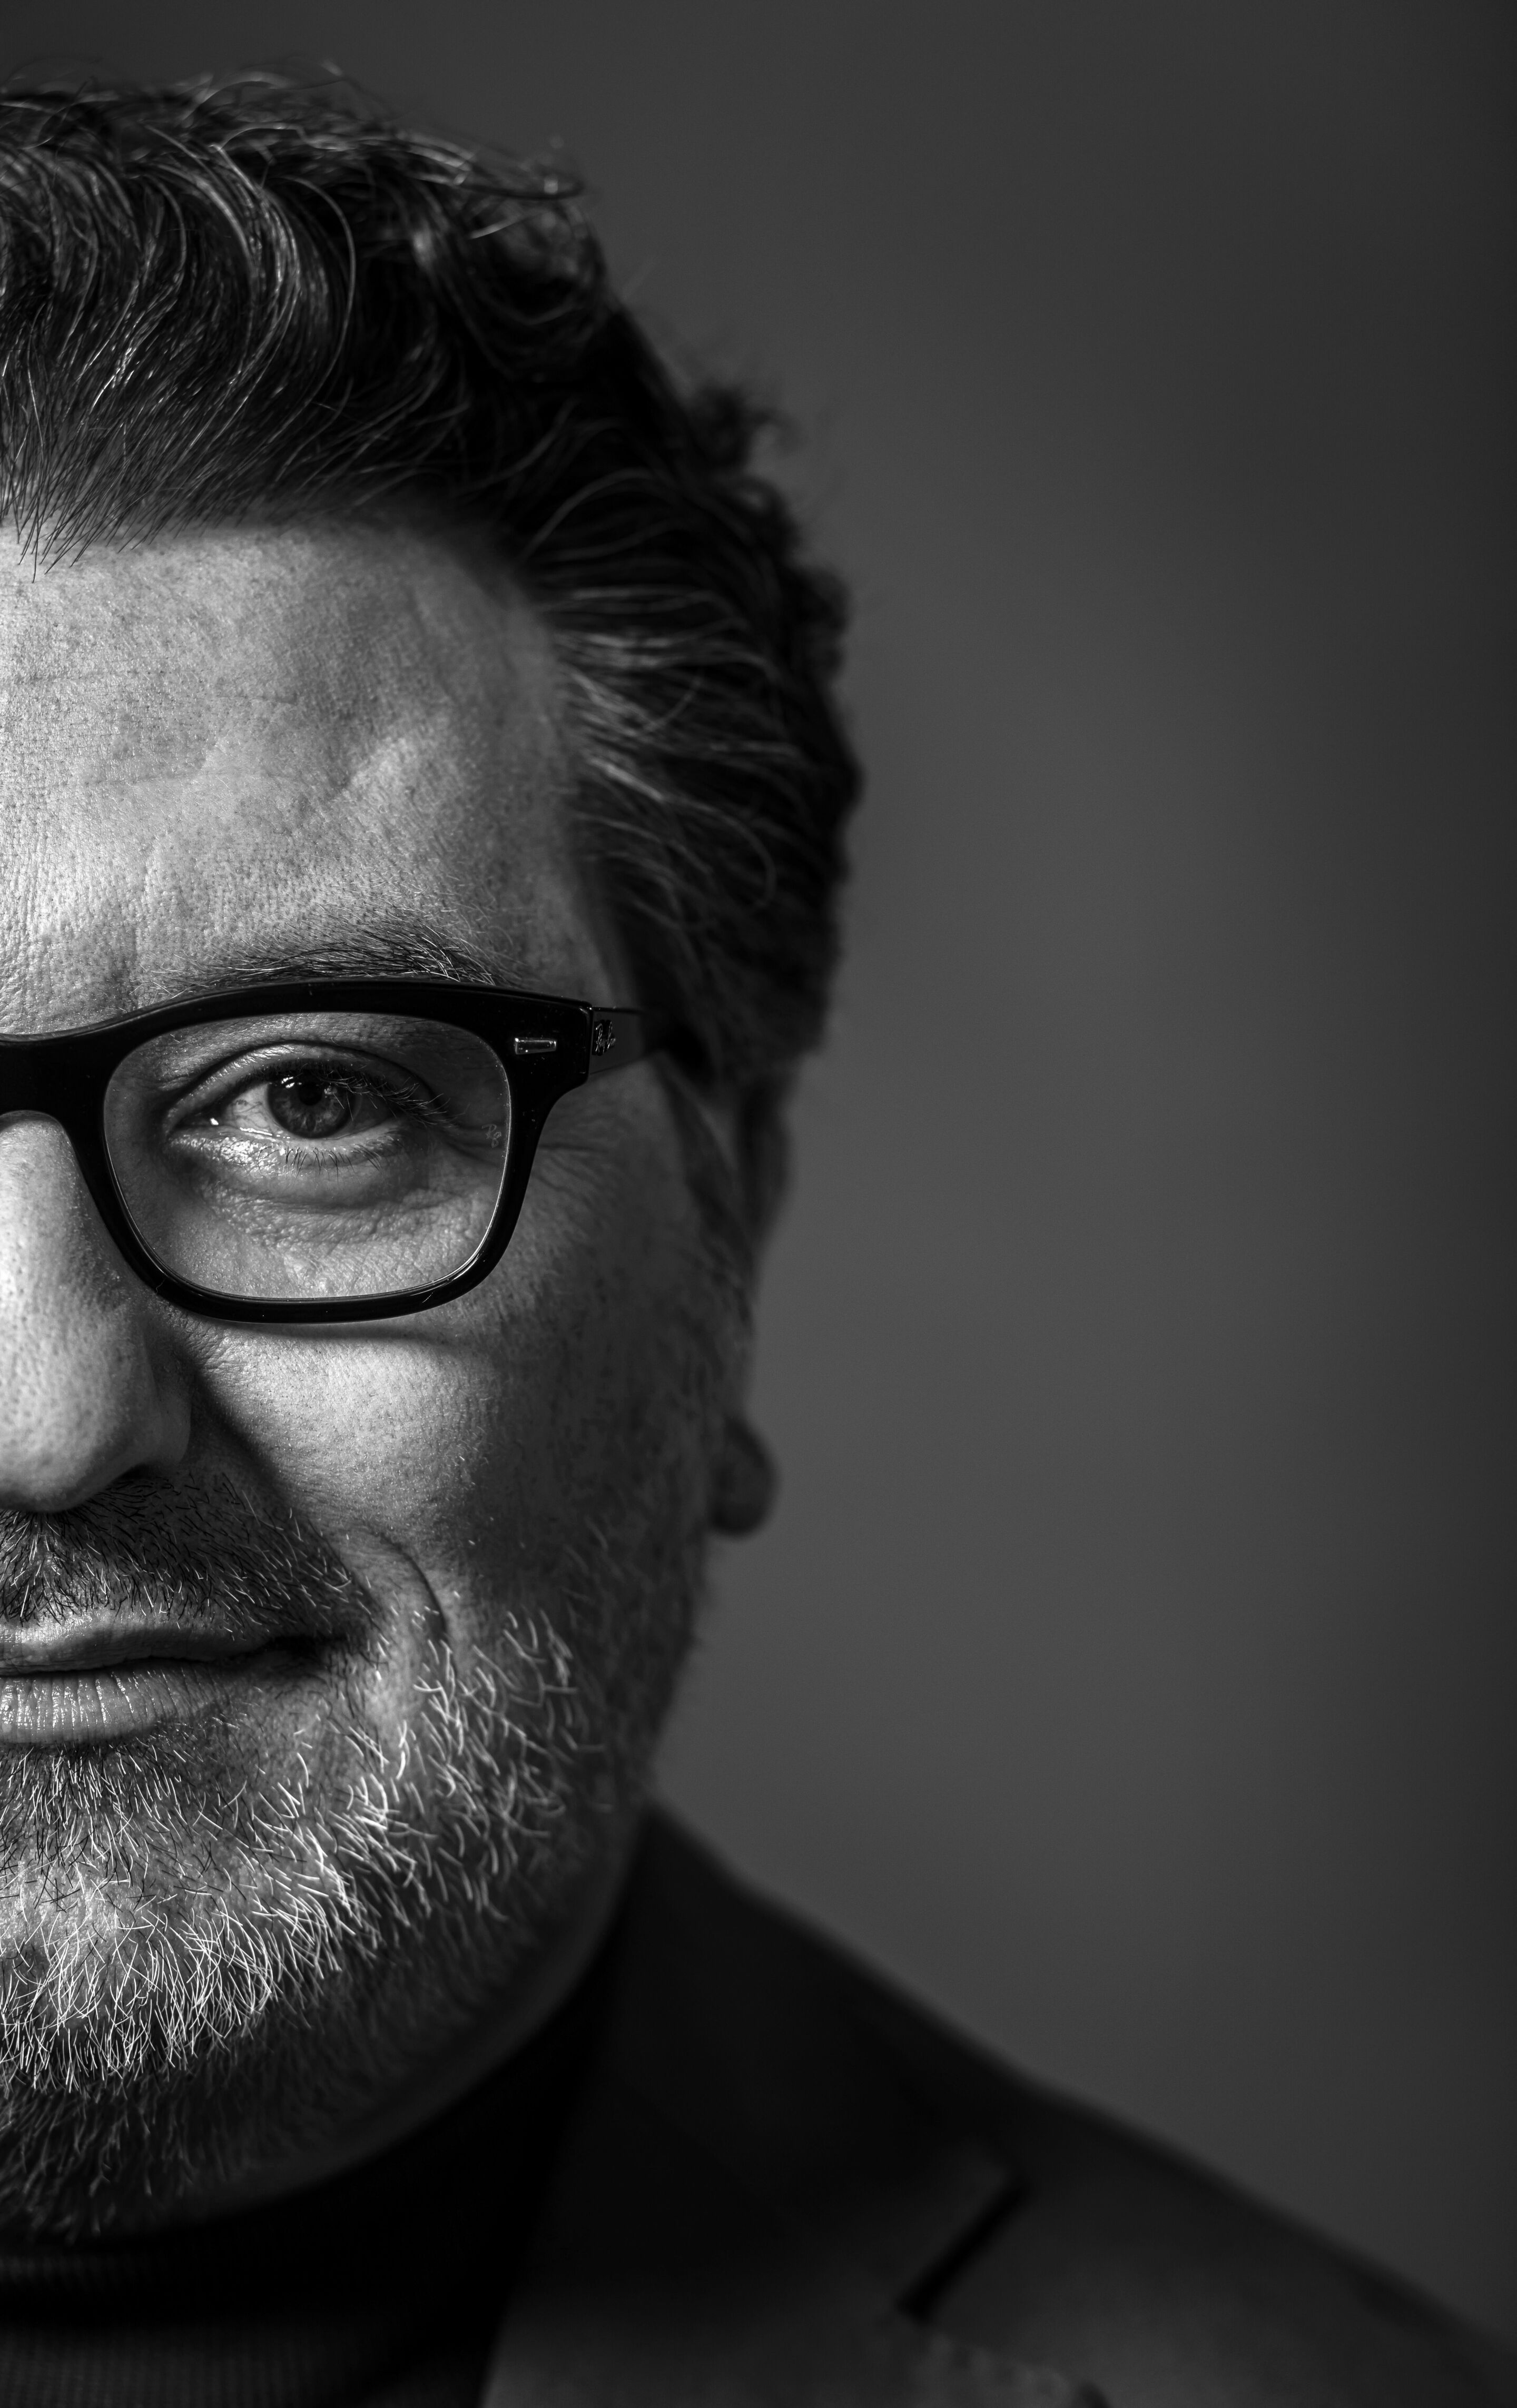 Massimo Frascella becomes new Head of Design at Audi